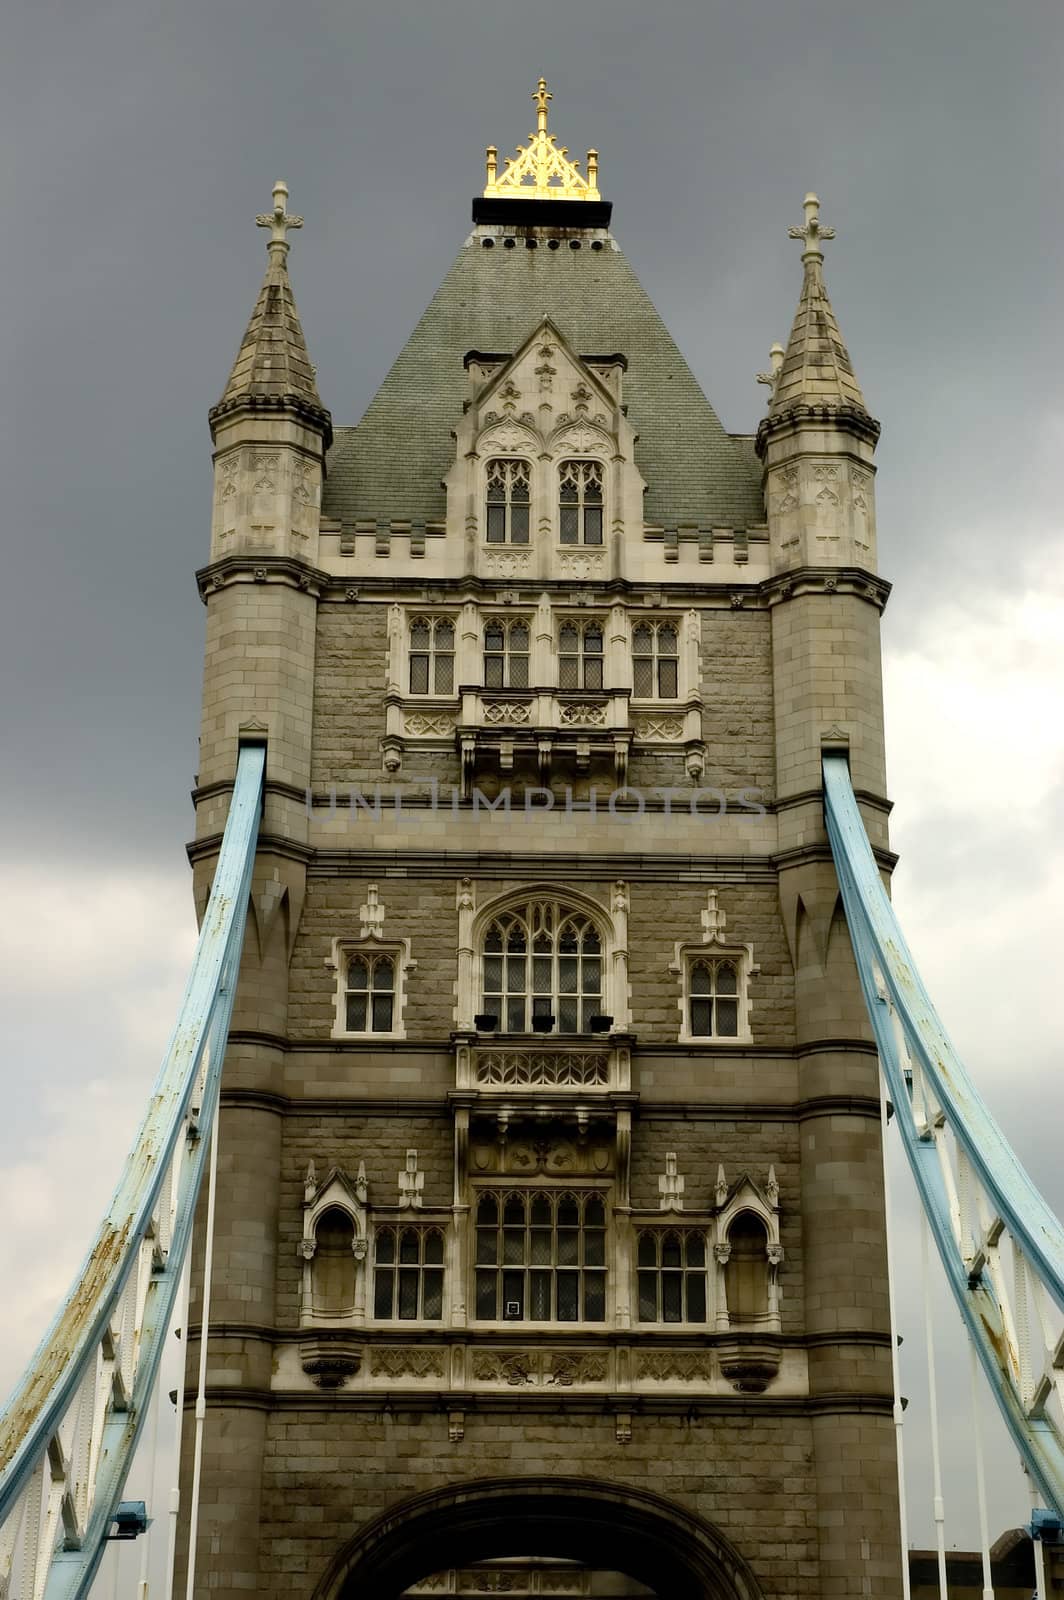 The London Bridge by eugenef